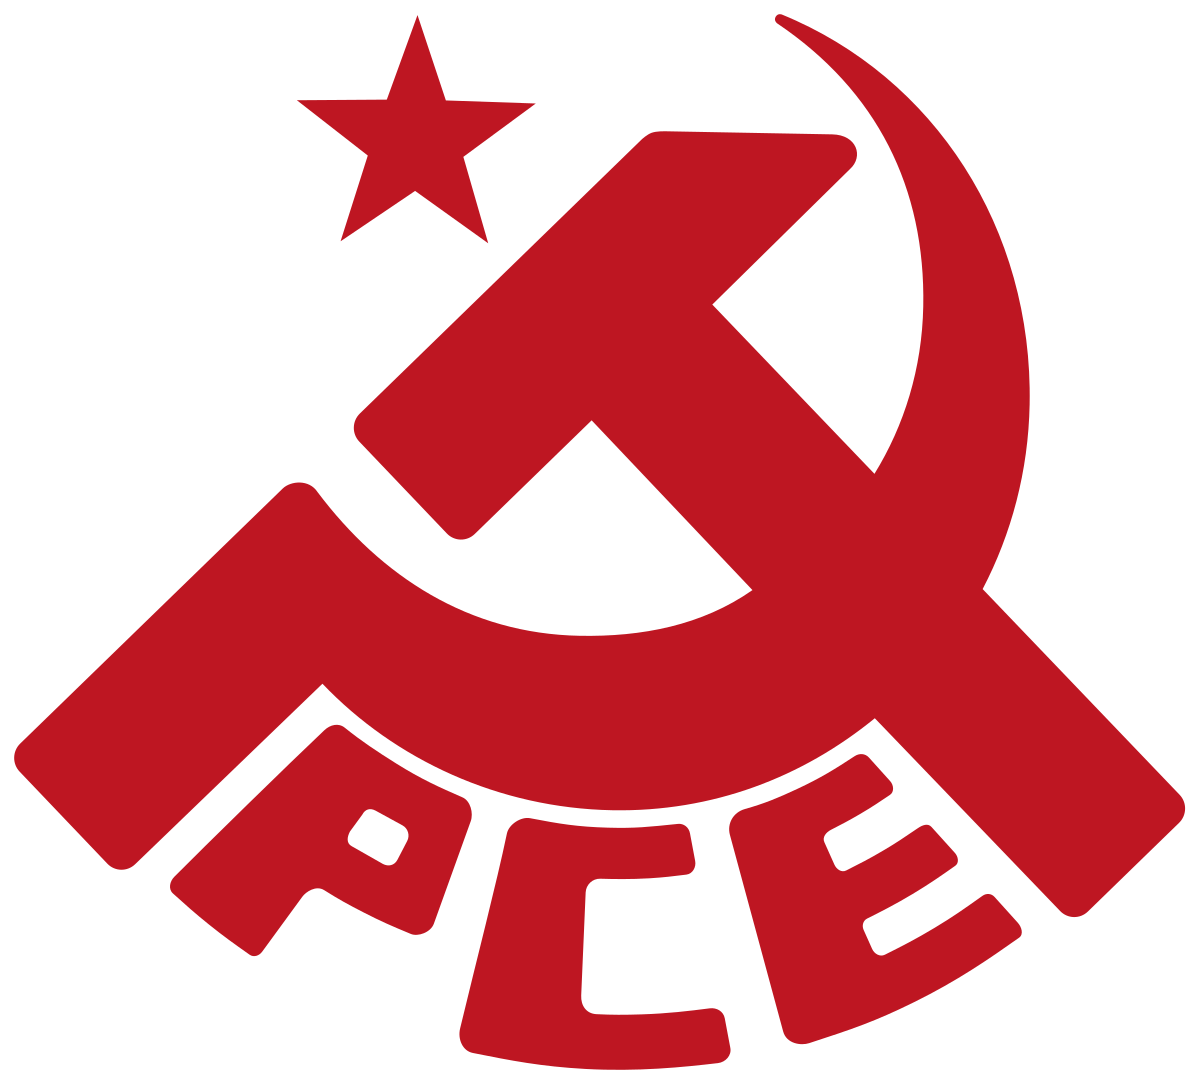 Pce logo